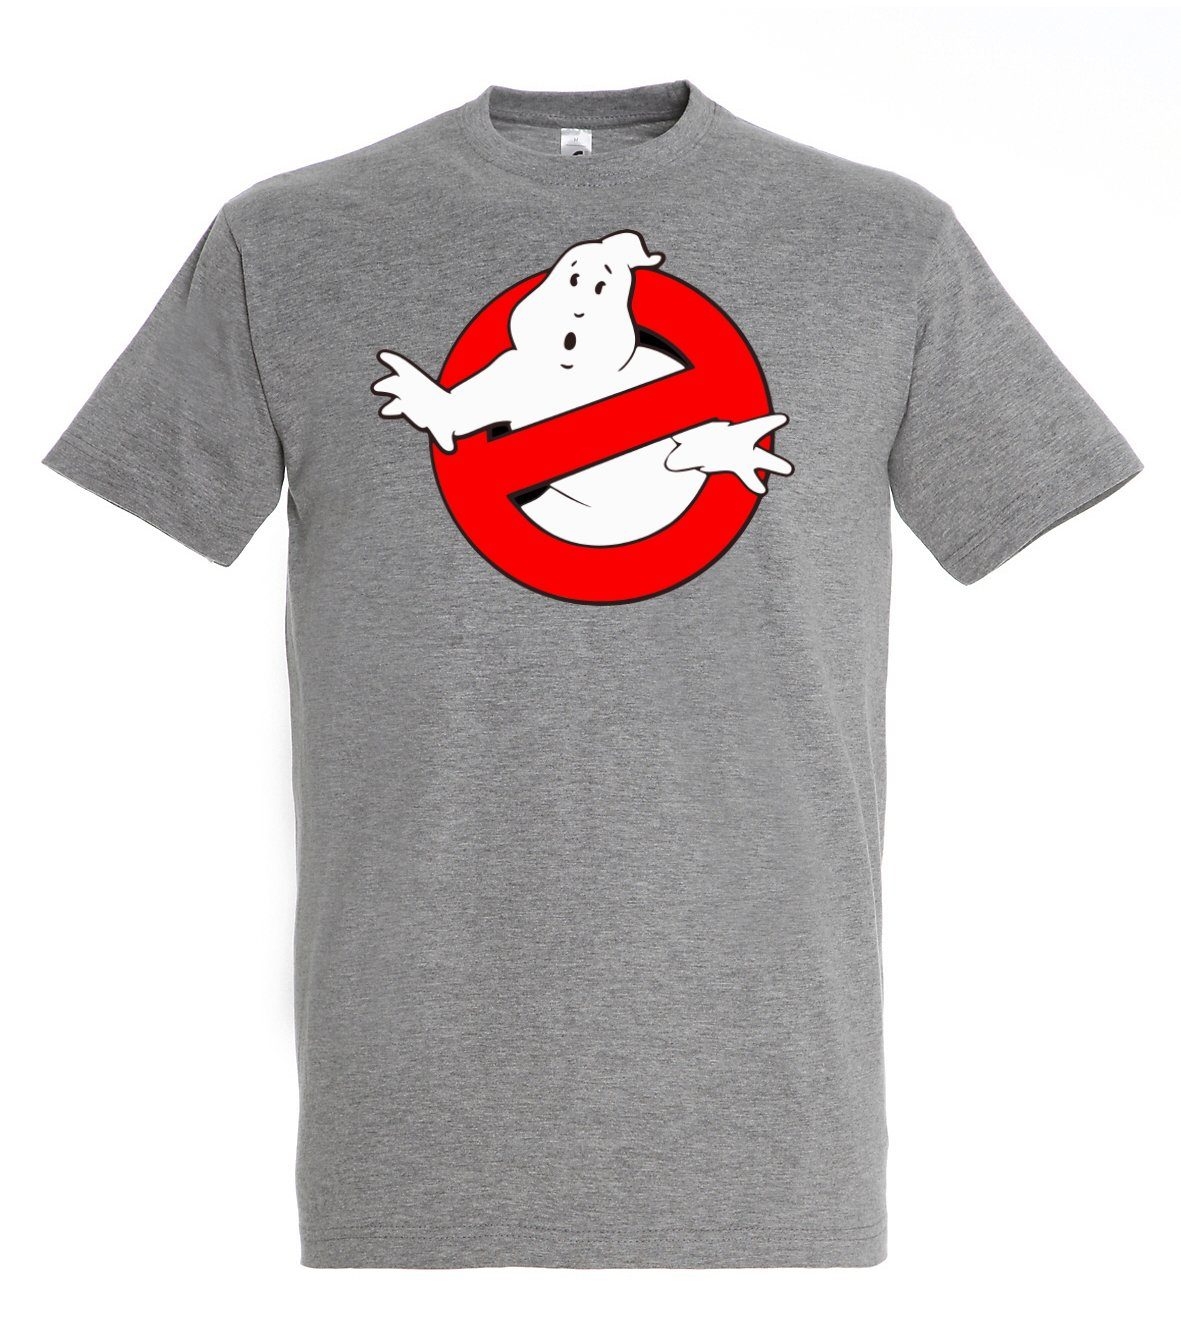 Youth Designz T-Shirt Ghostbusters Herren T-Shirt mit coolen Frontprint Grau